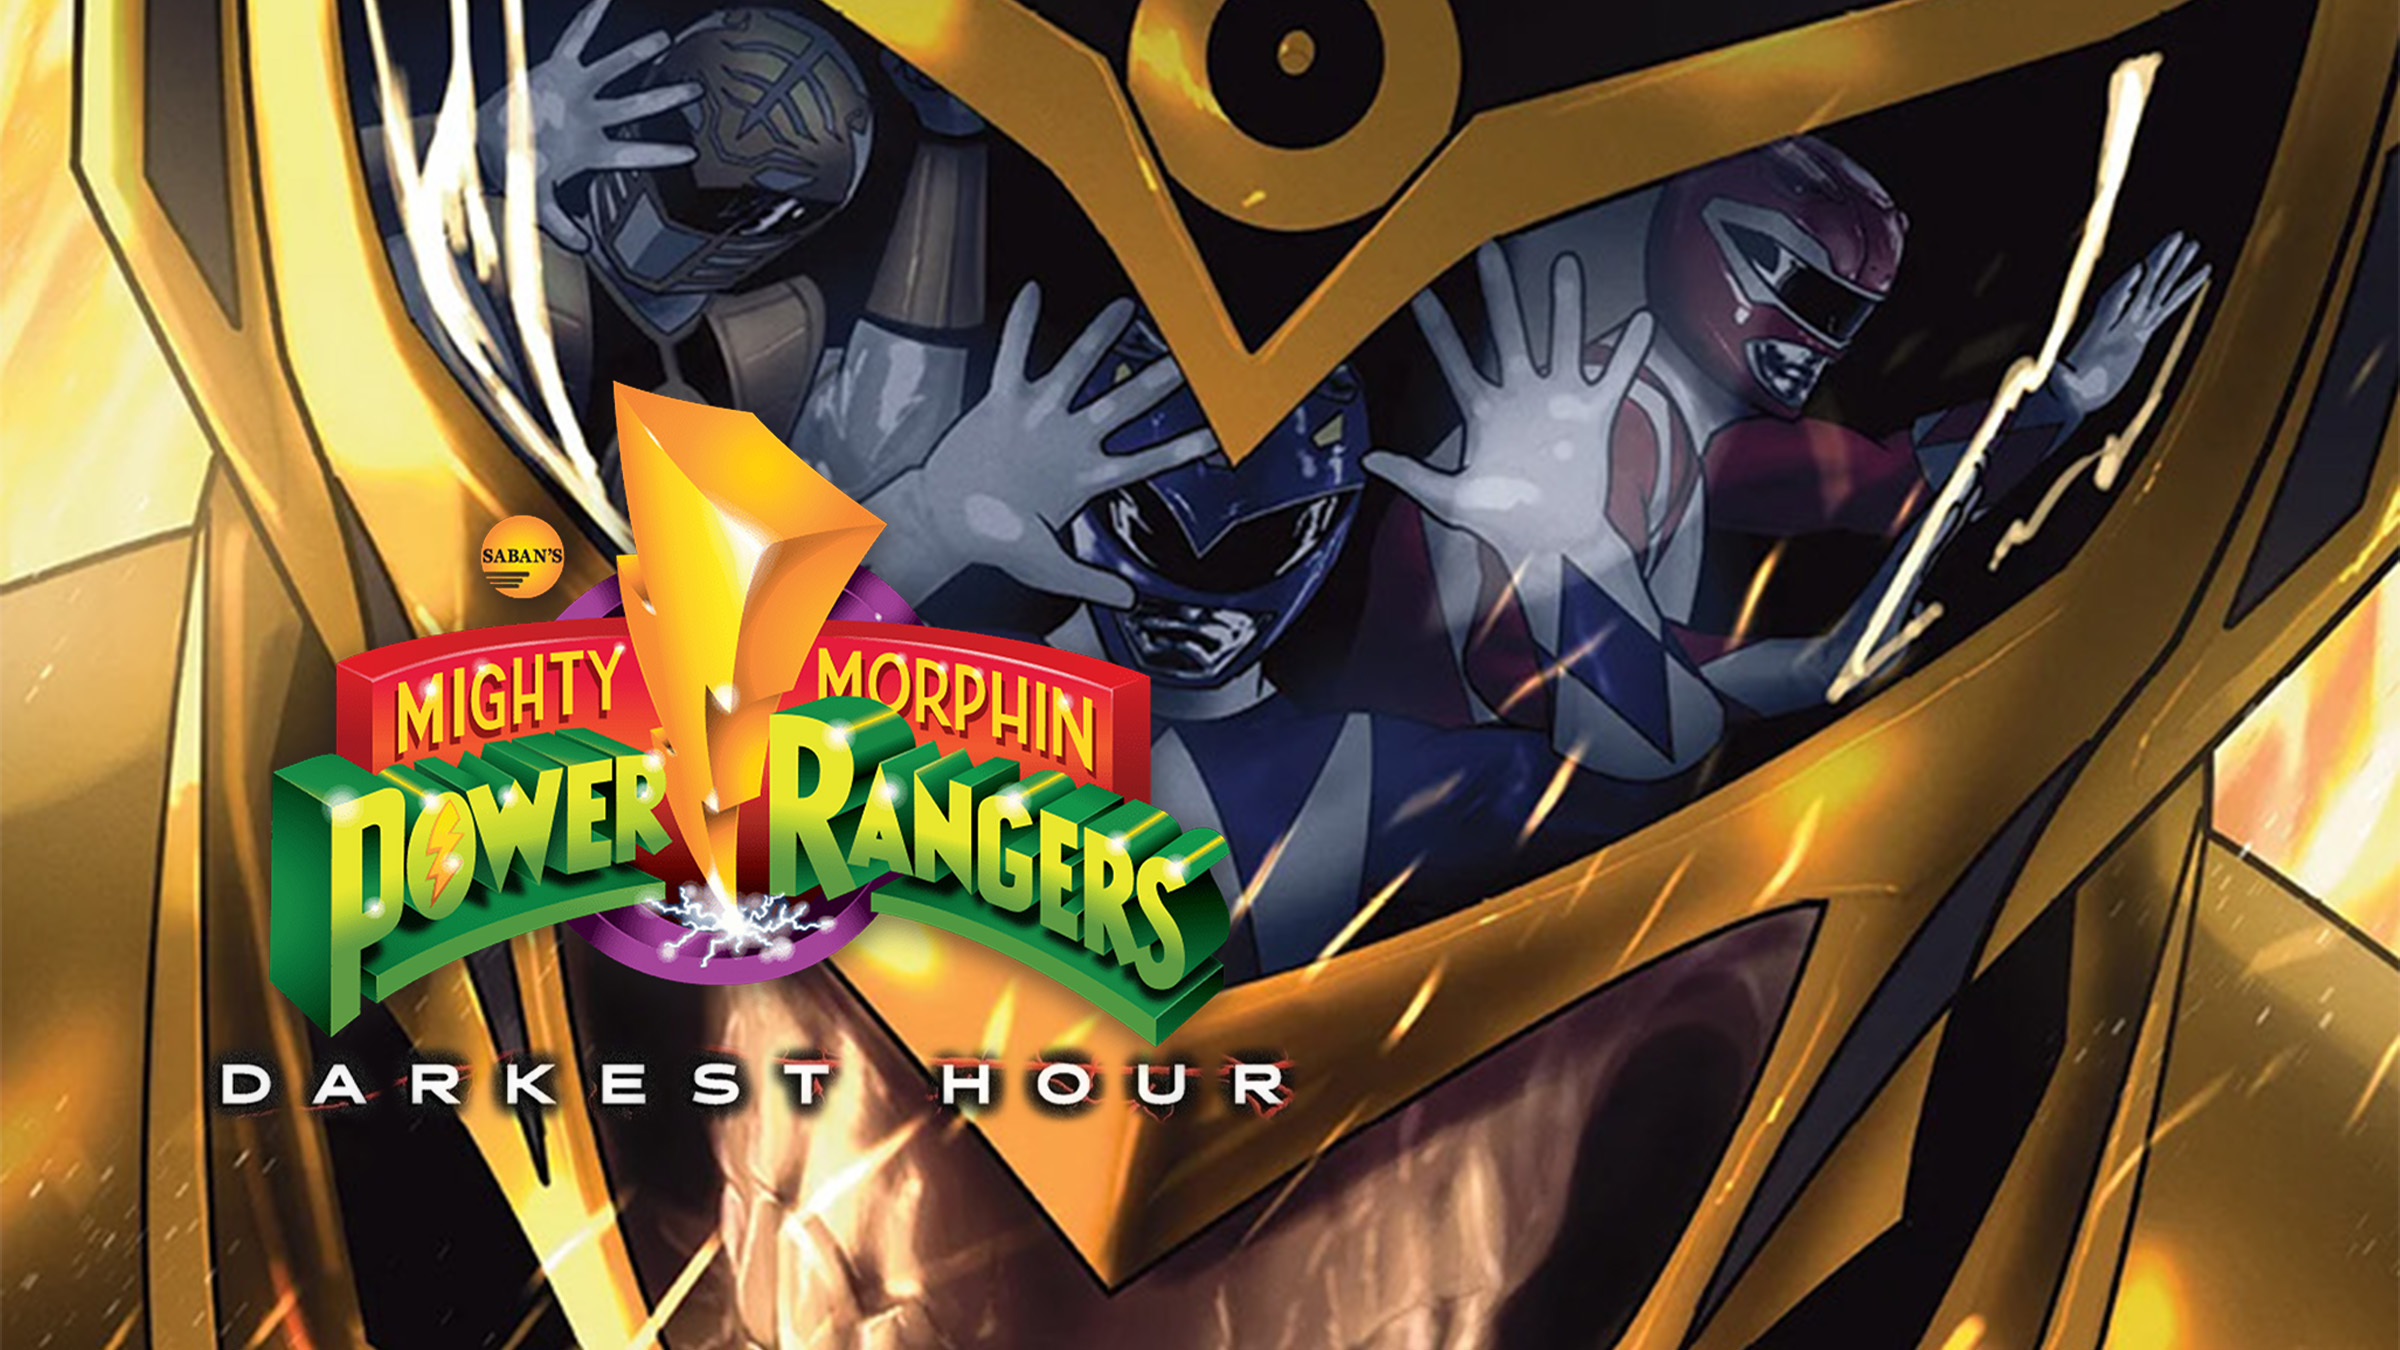 Boom! Studios Reveals Power Rangers Darkest Hour Comic Event and